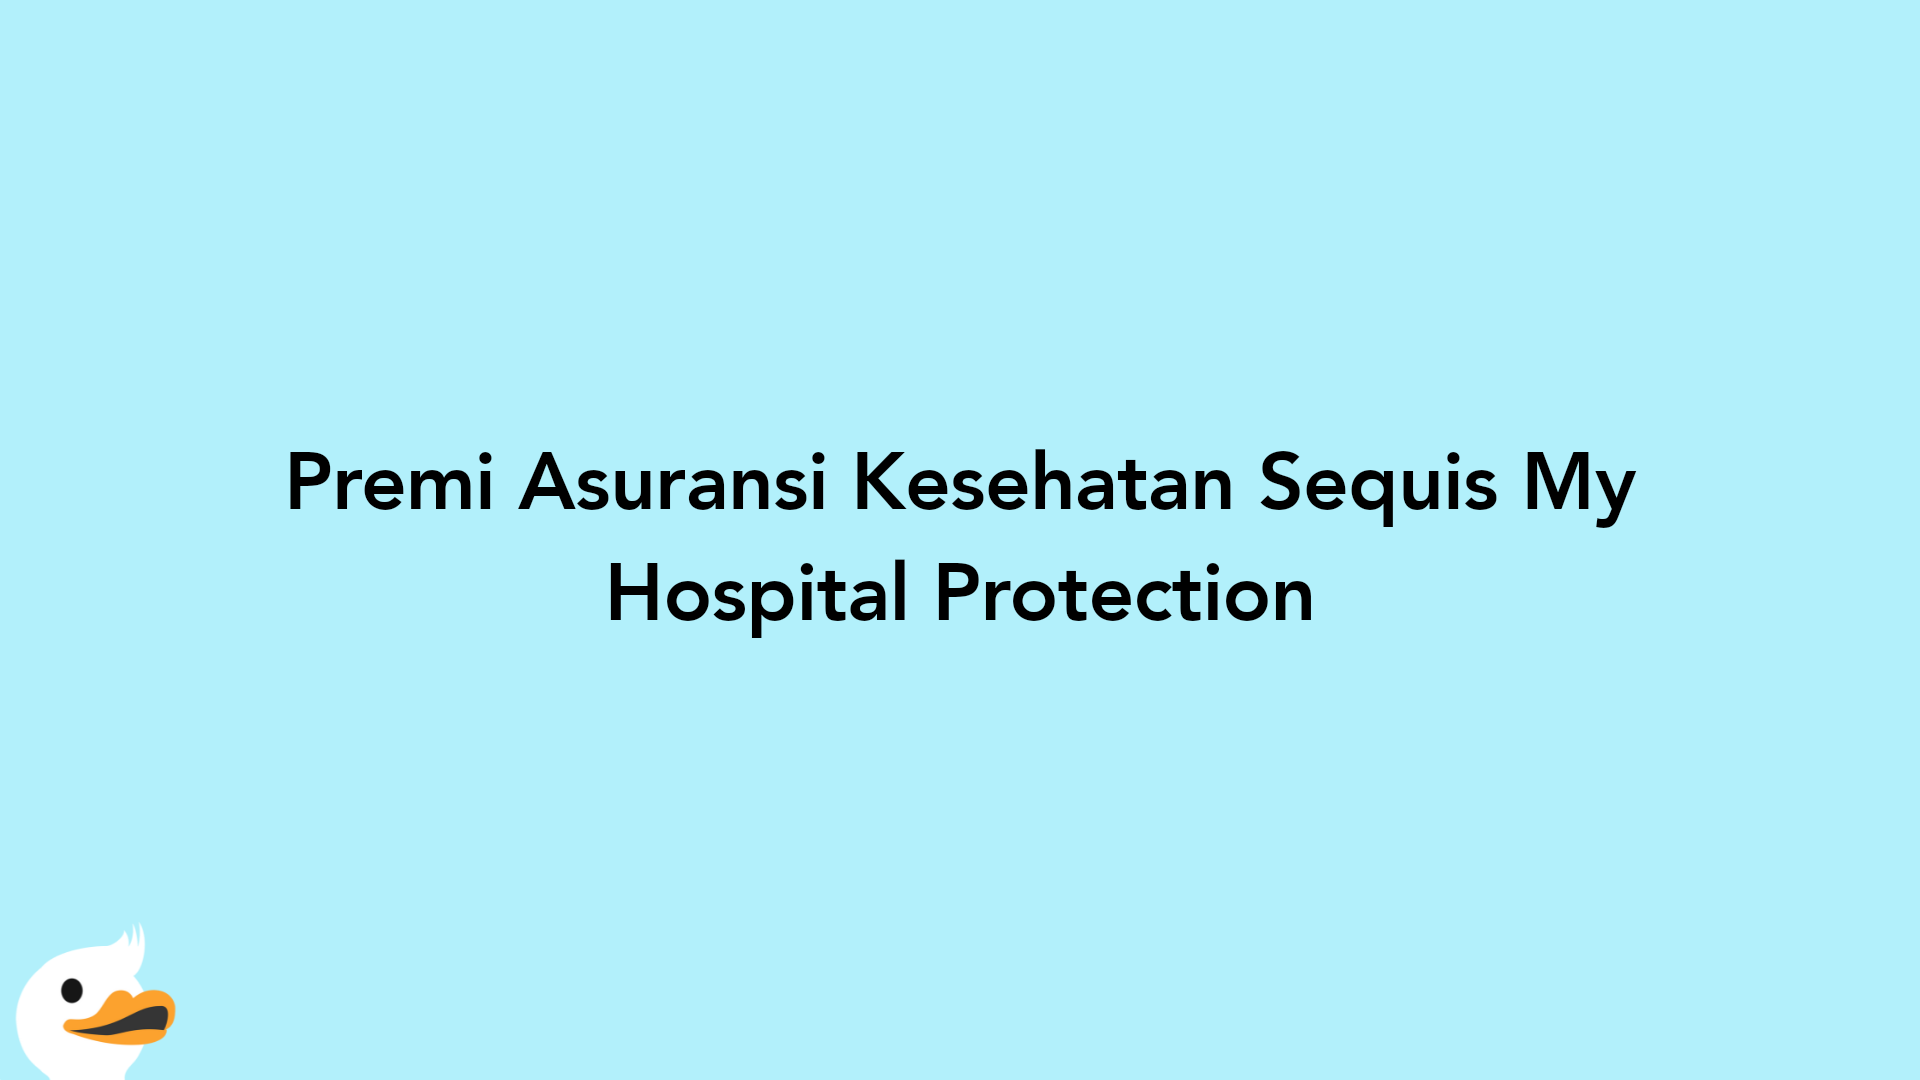 Premi Asuransi Kesehatan Sequis My Hospital Protection